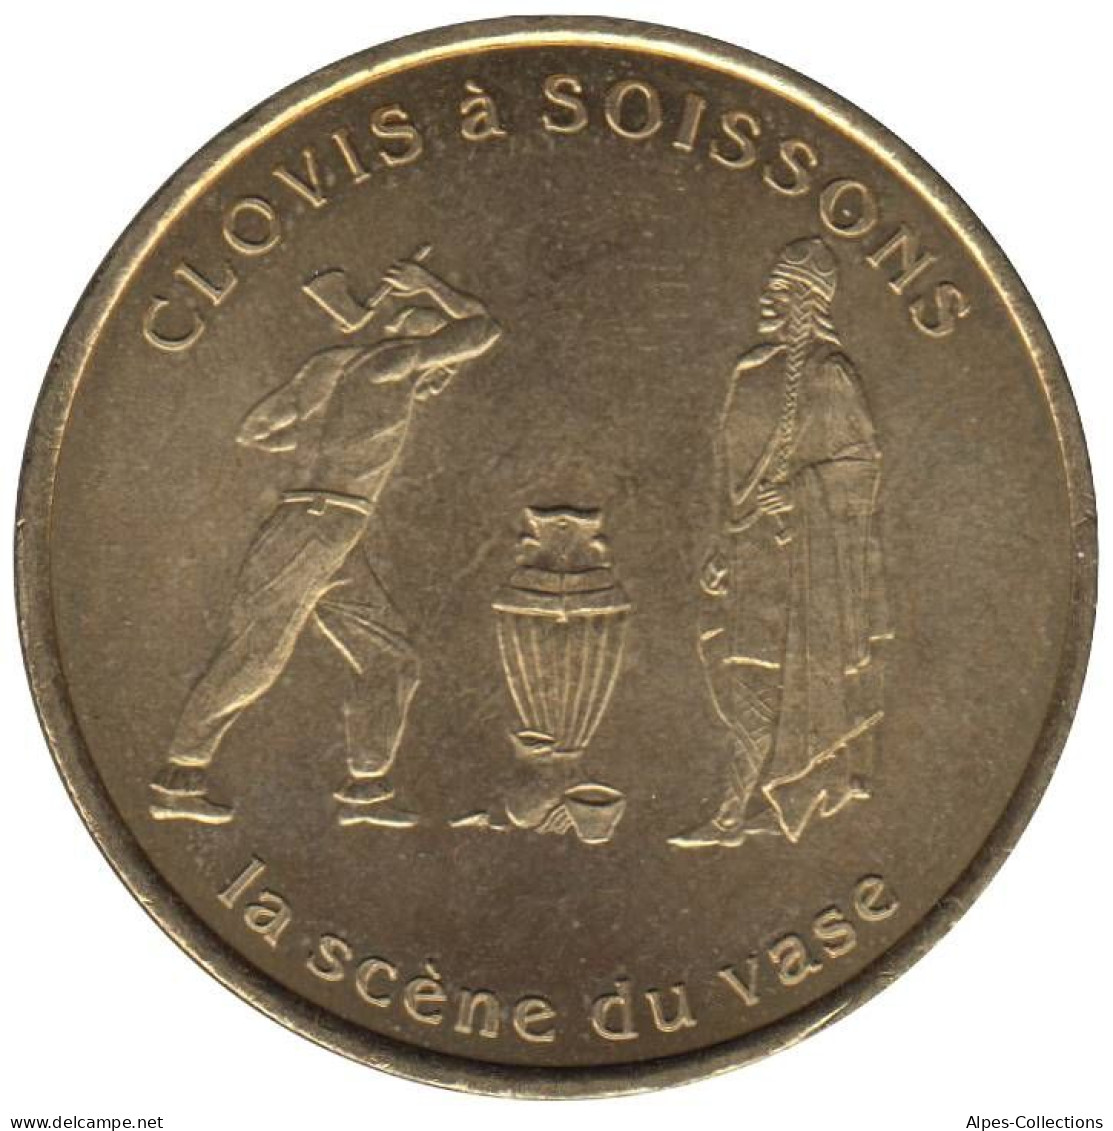 SOISSONS - EU0010.2 - 1 EURO DES VILLES - Réf: T391 - 1997 - Euros De Las Ciudades